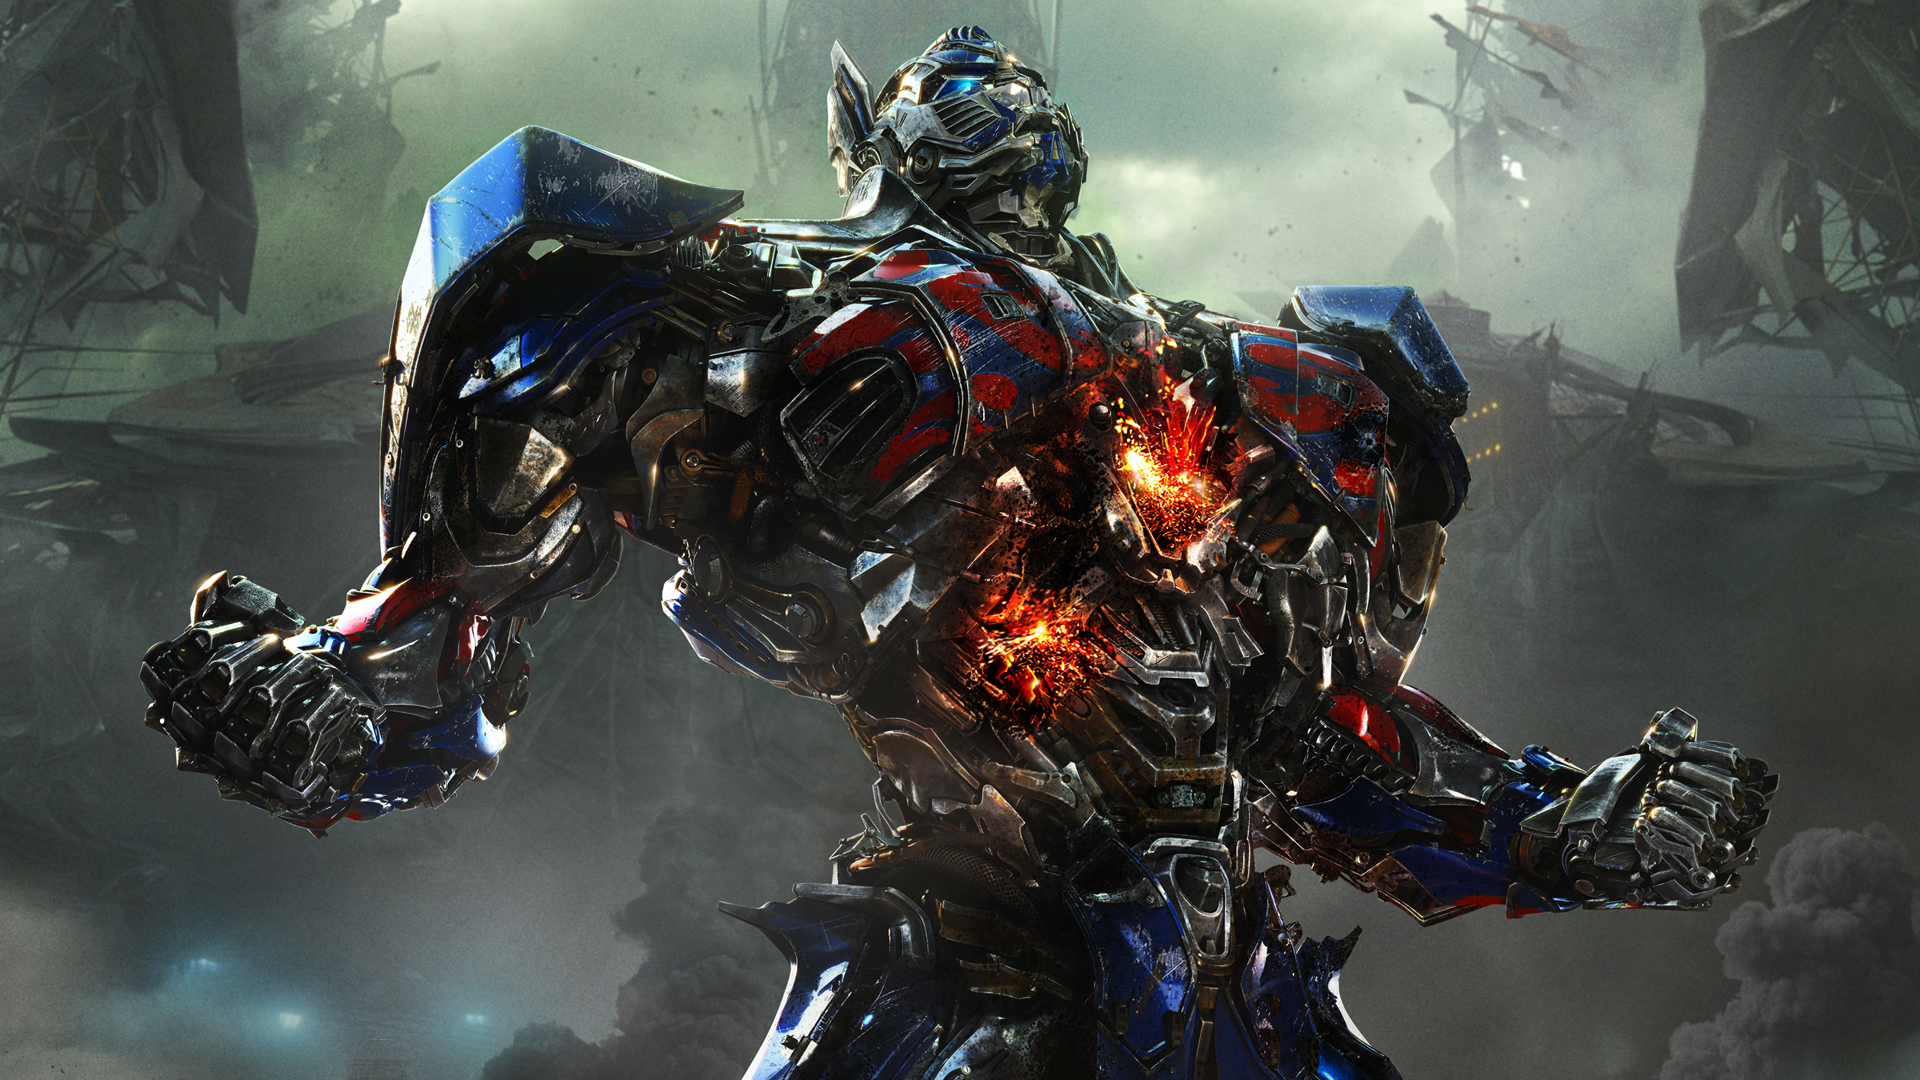 optimus prime transformers age of extinction 4 2014 action adventure